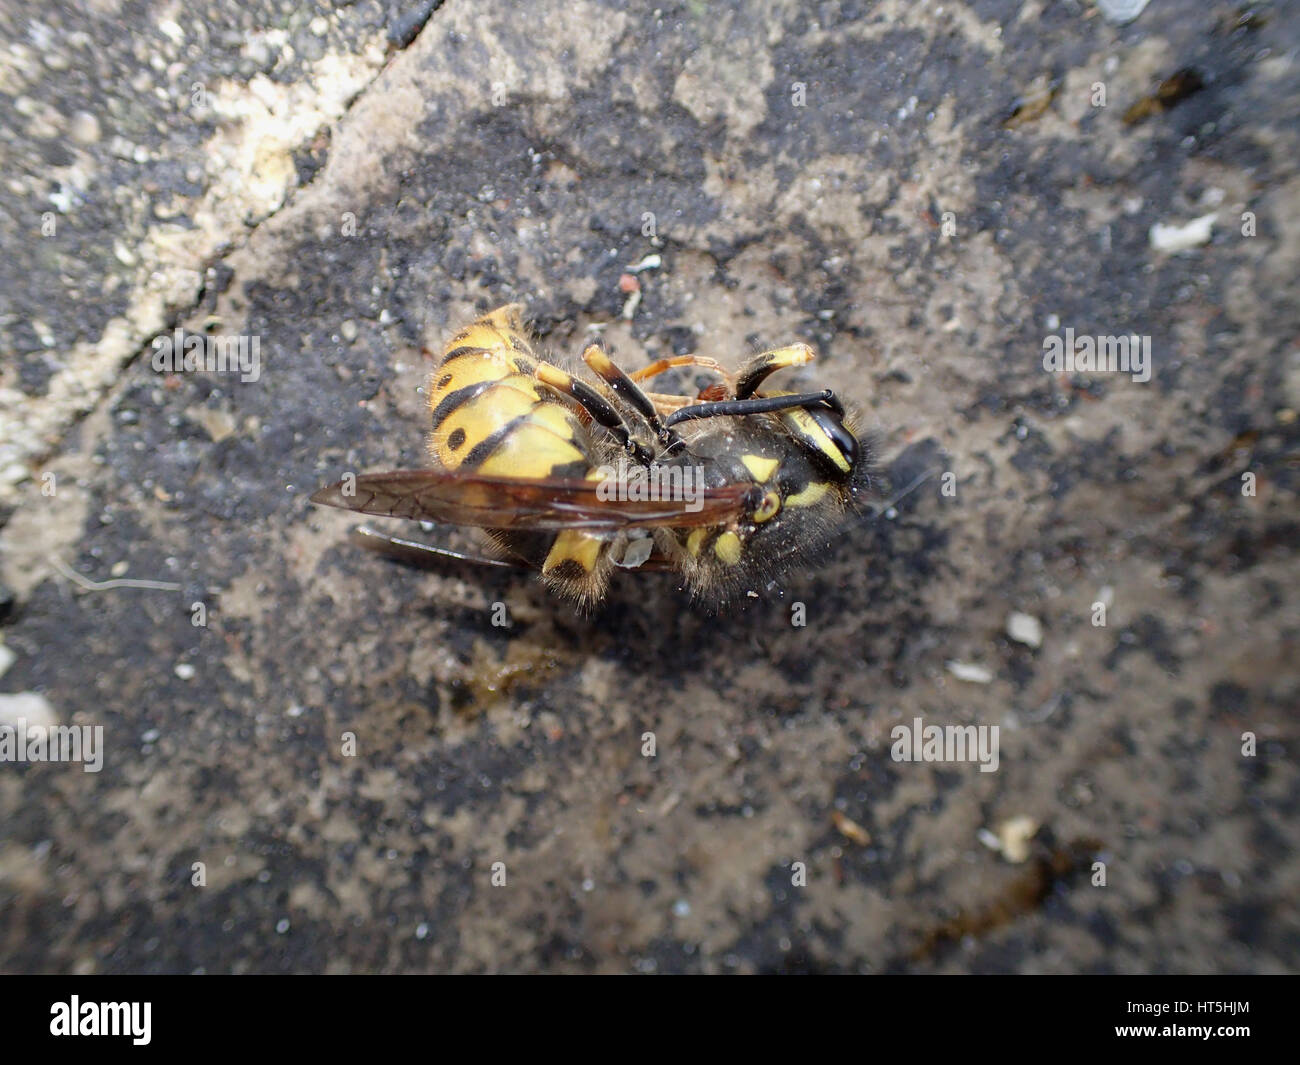 Close up side view of dead European wasp (Vespula vulgaris) lying on a limestone paving slab Stock Photo